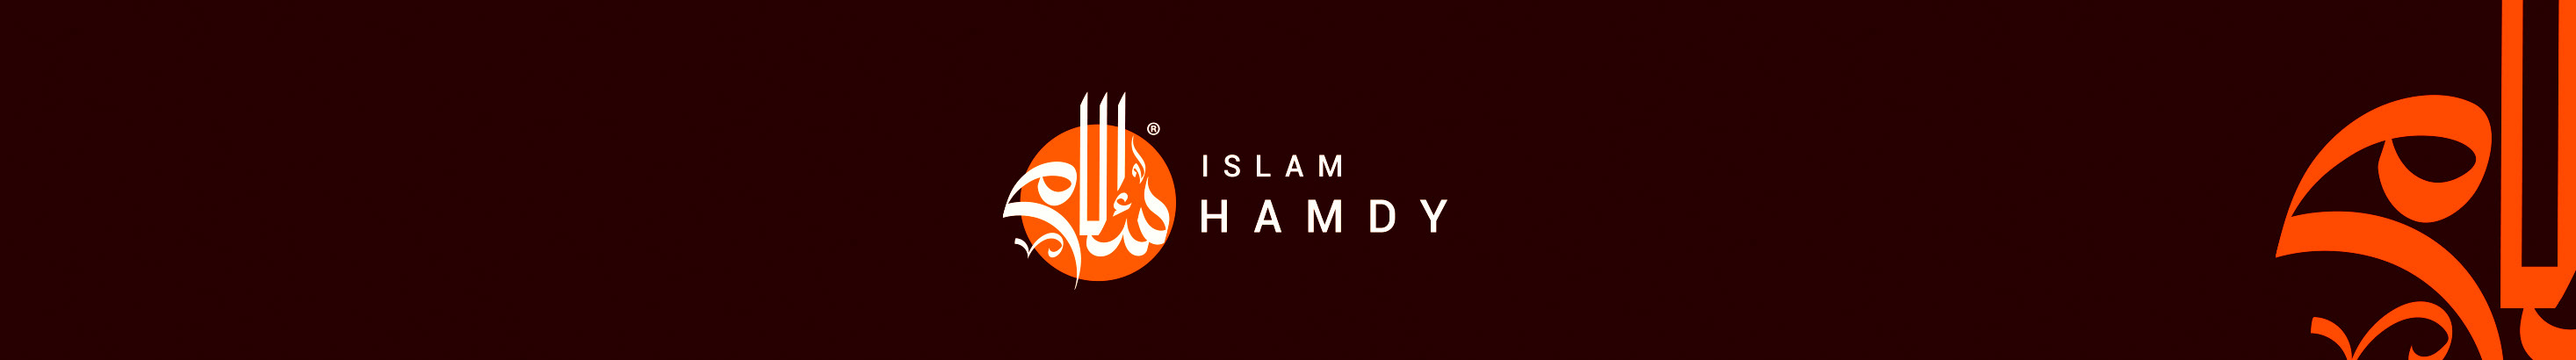 Islam Hamdy's profile banner